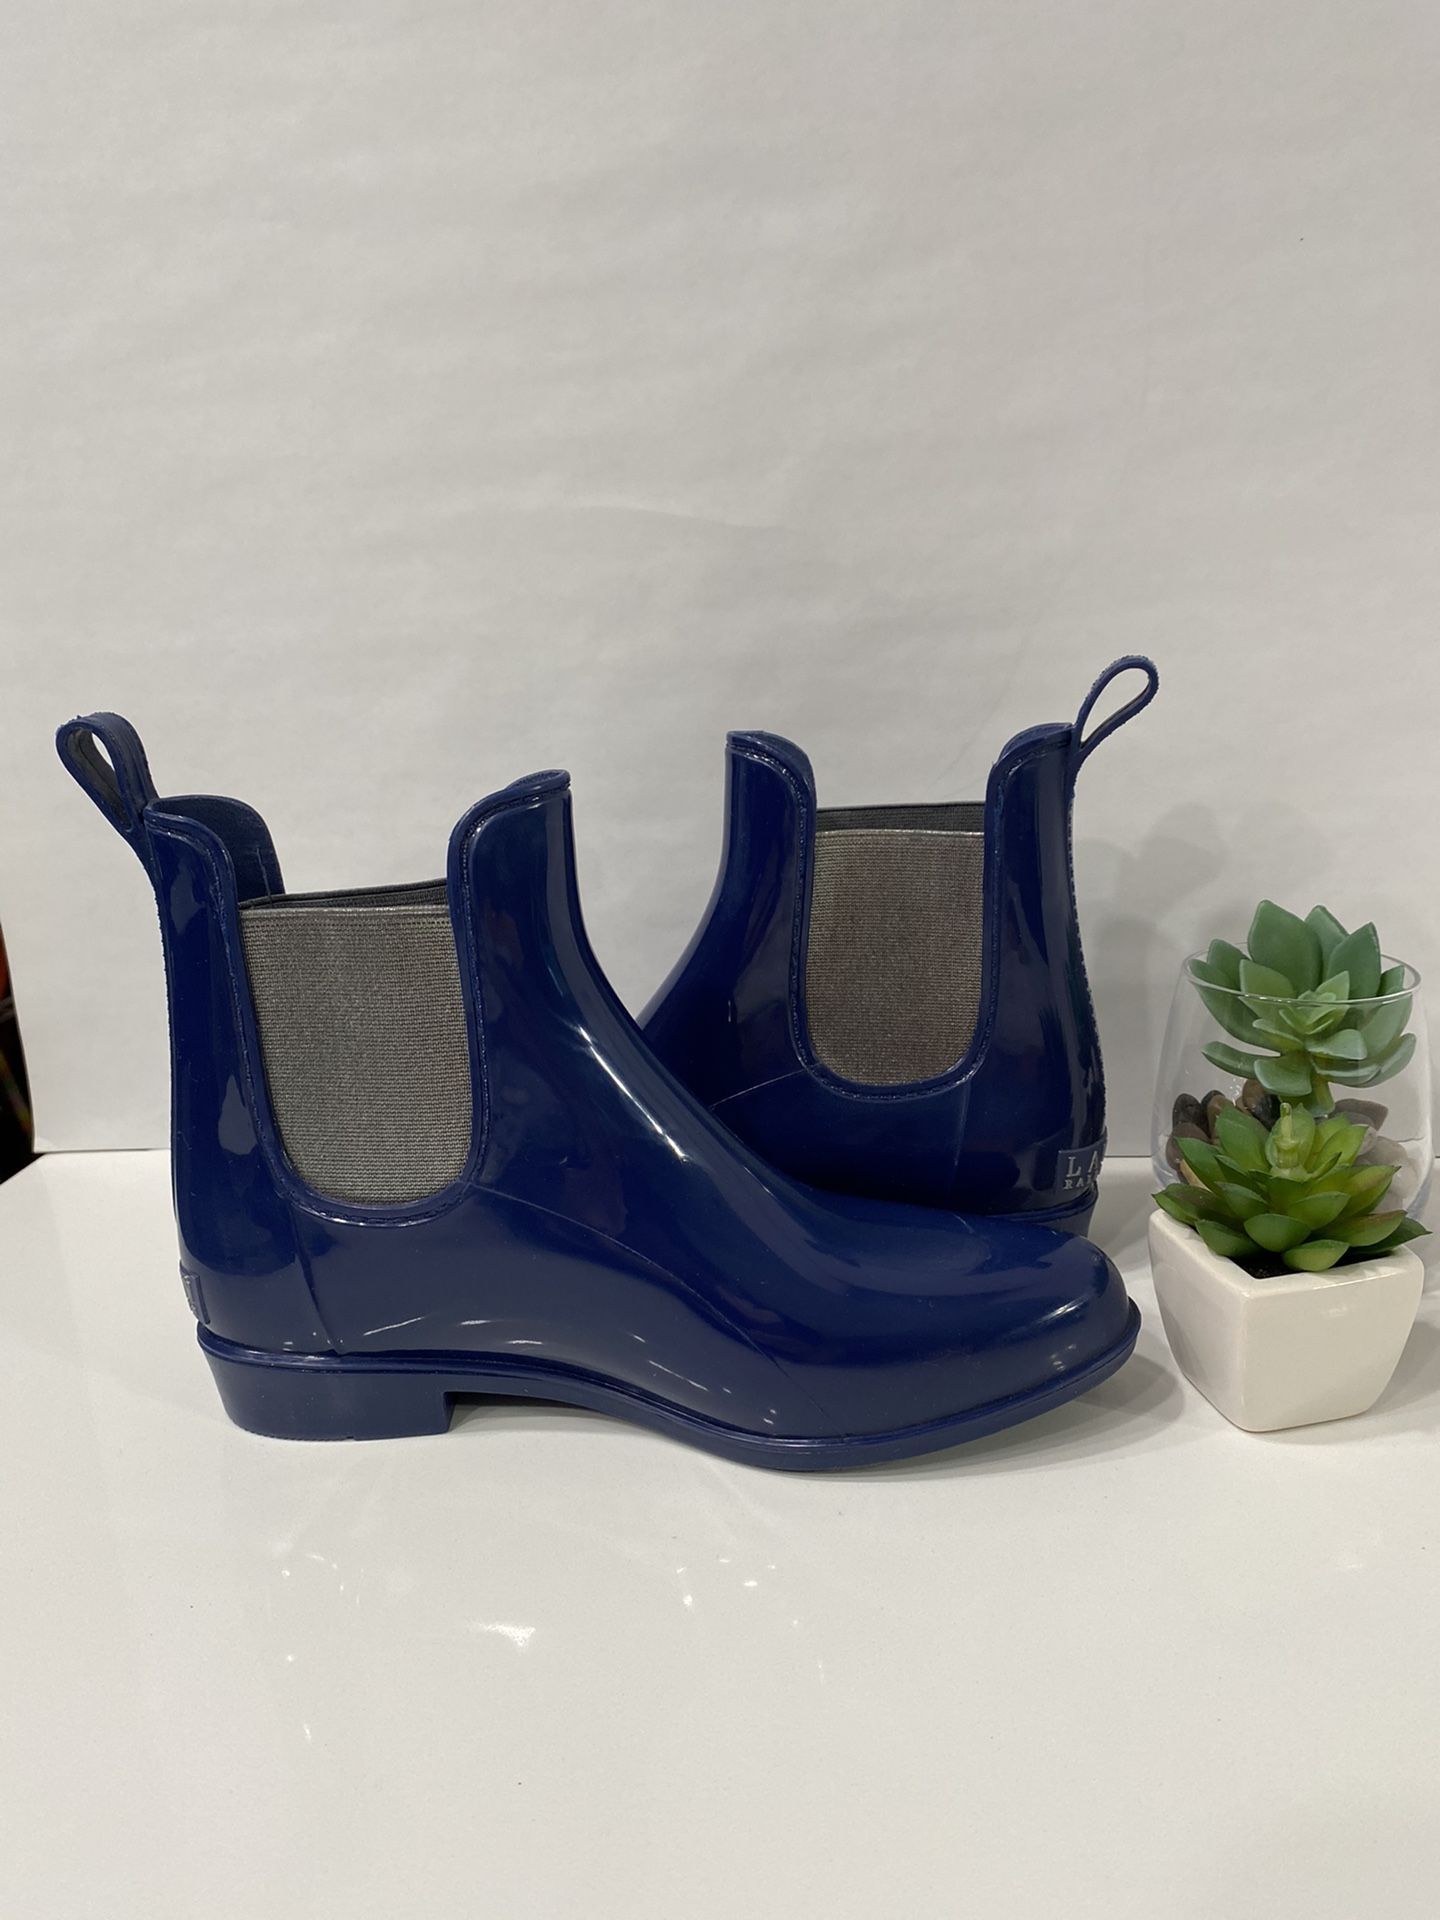 New Ralph Lauren Rain Boots size 8 in blue